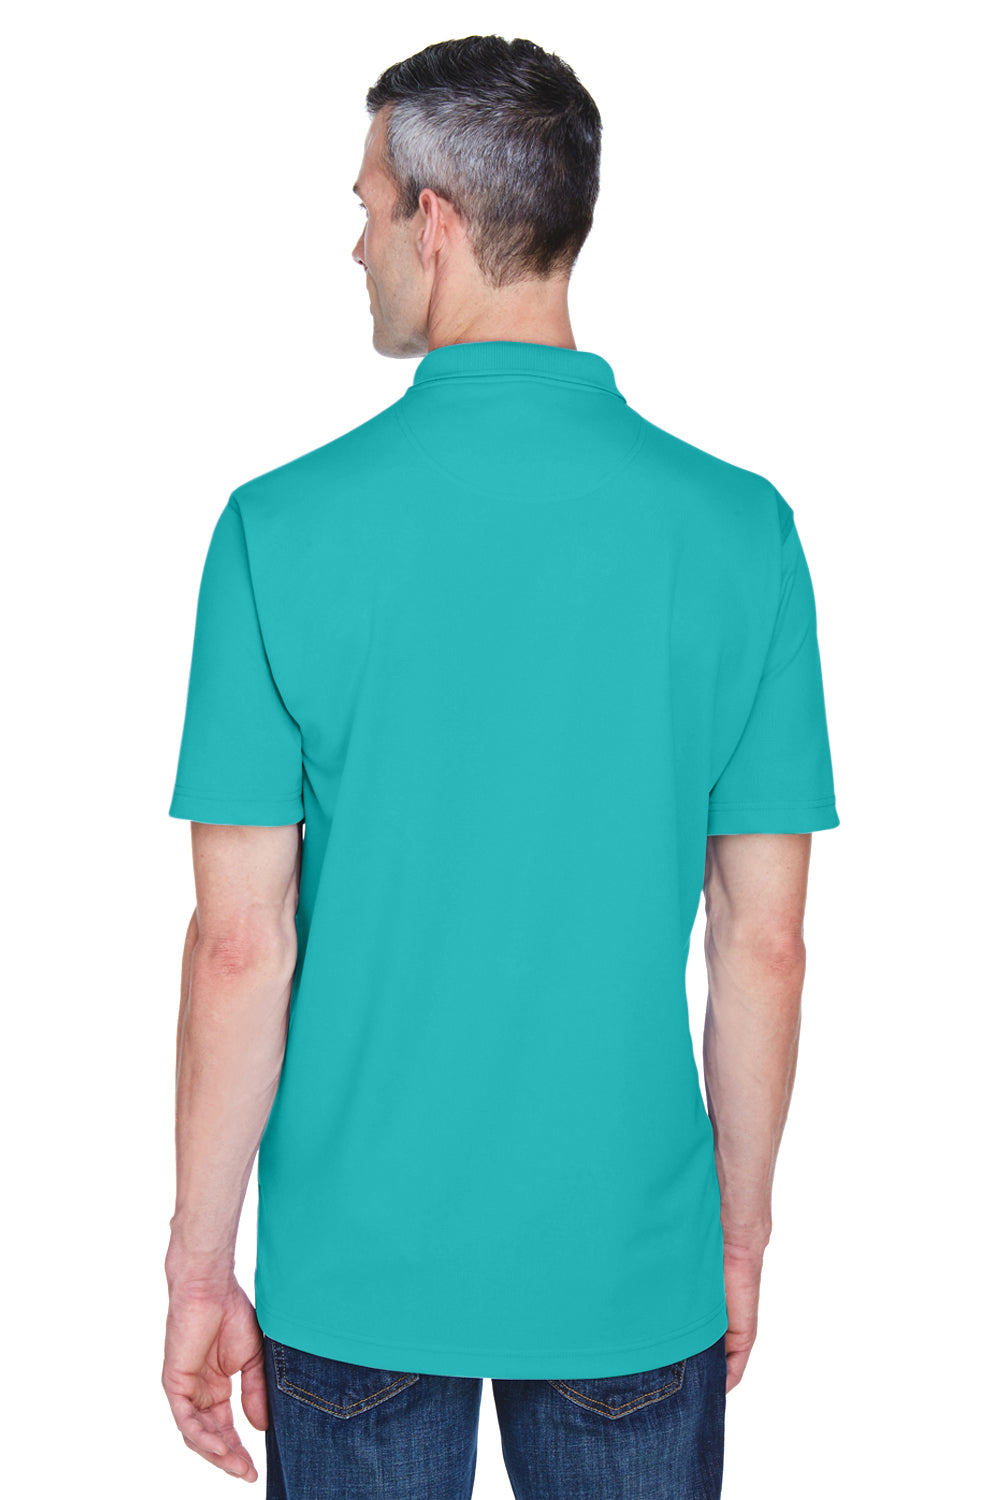 UltraClub 8445 Mens Cool & Dry Performance Moisture Wicking Short Sleeve Polo Shirt Jade Green Back